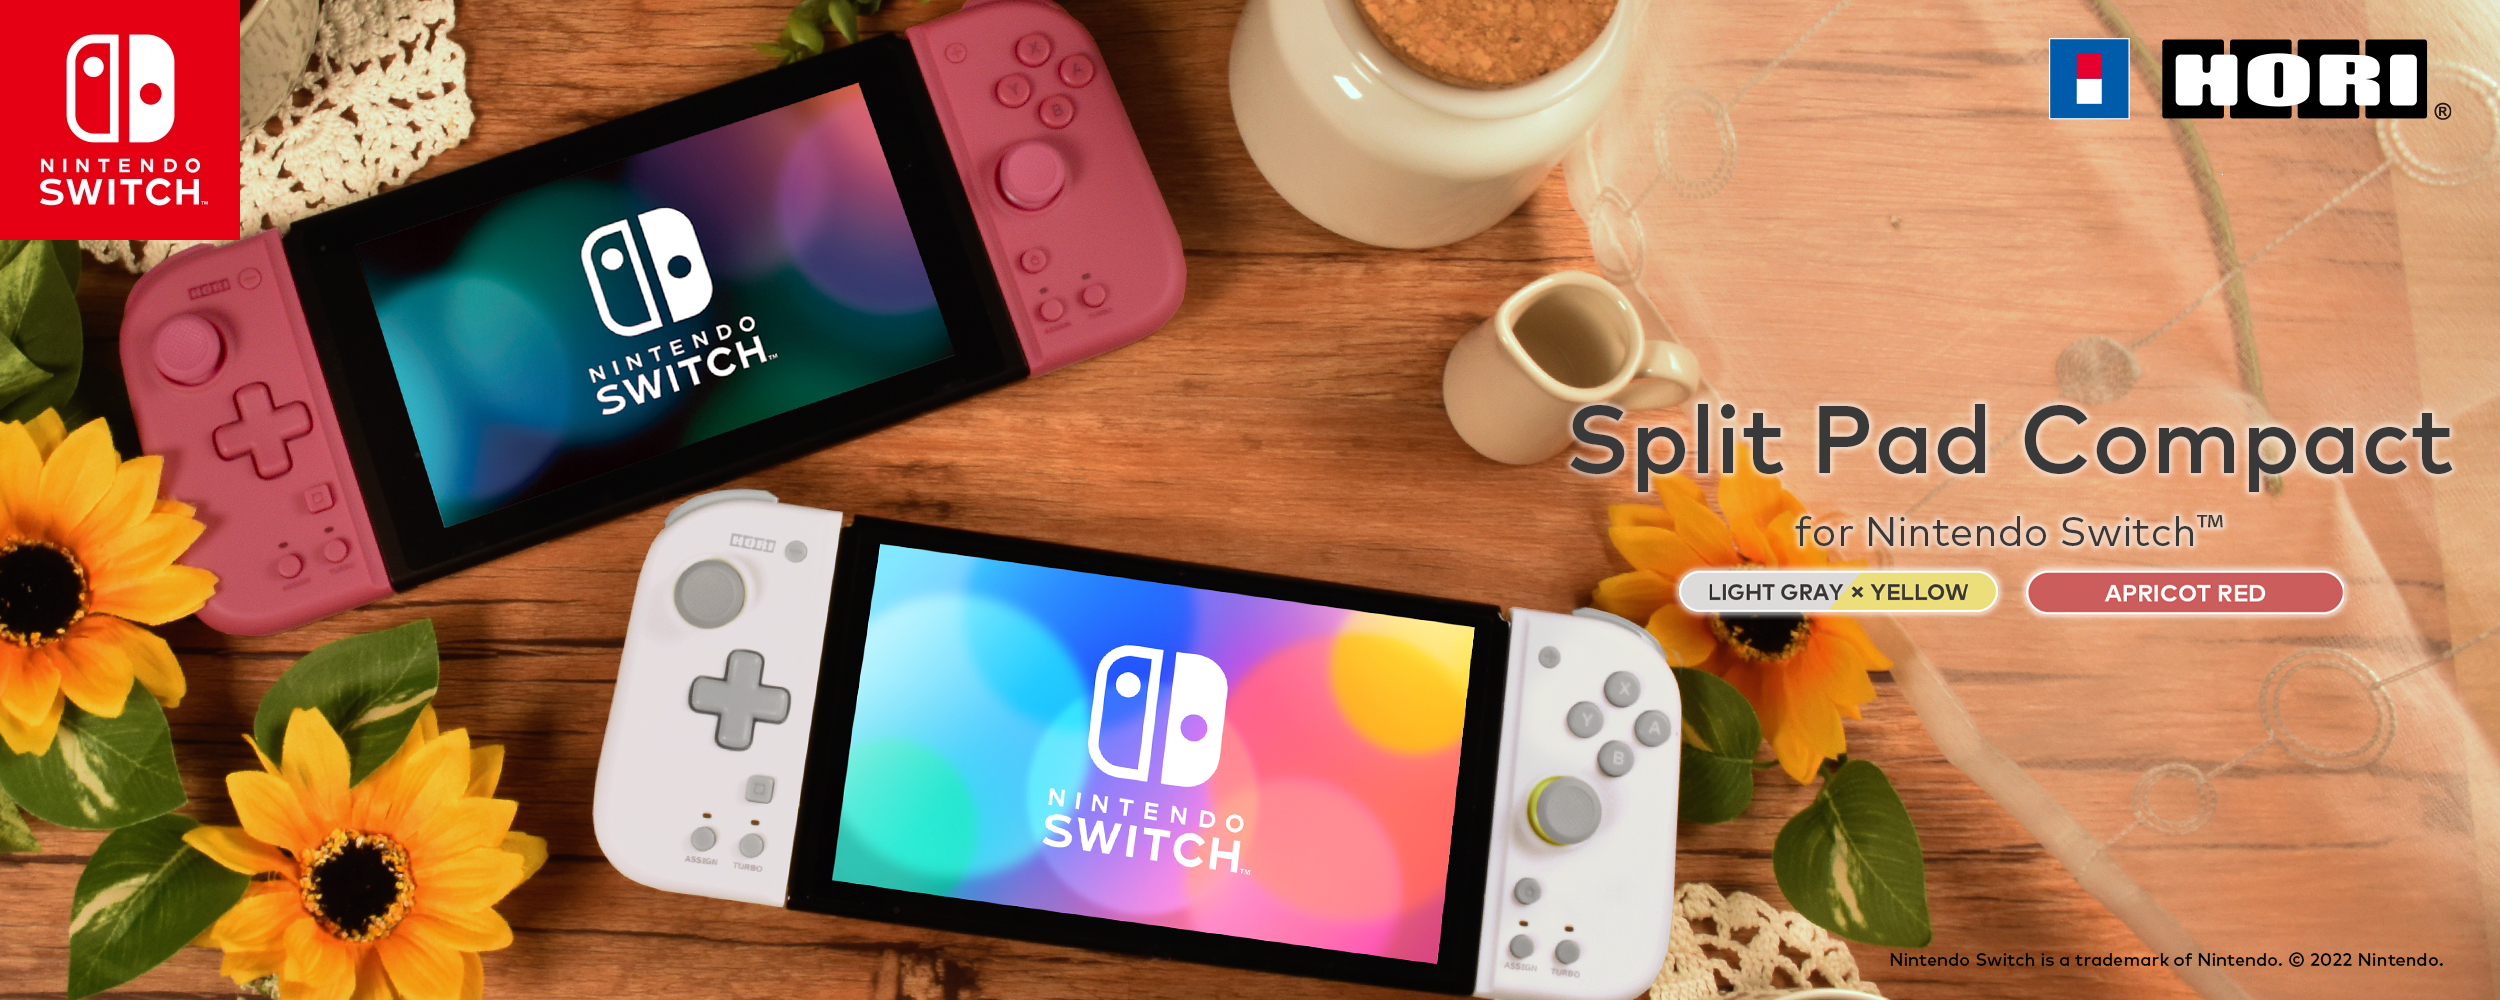 Split Pad Compact (Light Gray & Yellow ) for Nintendo Switch